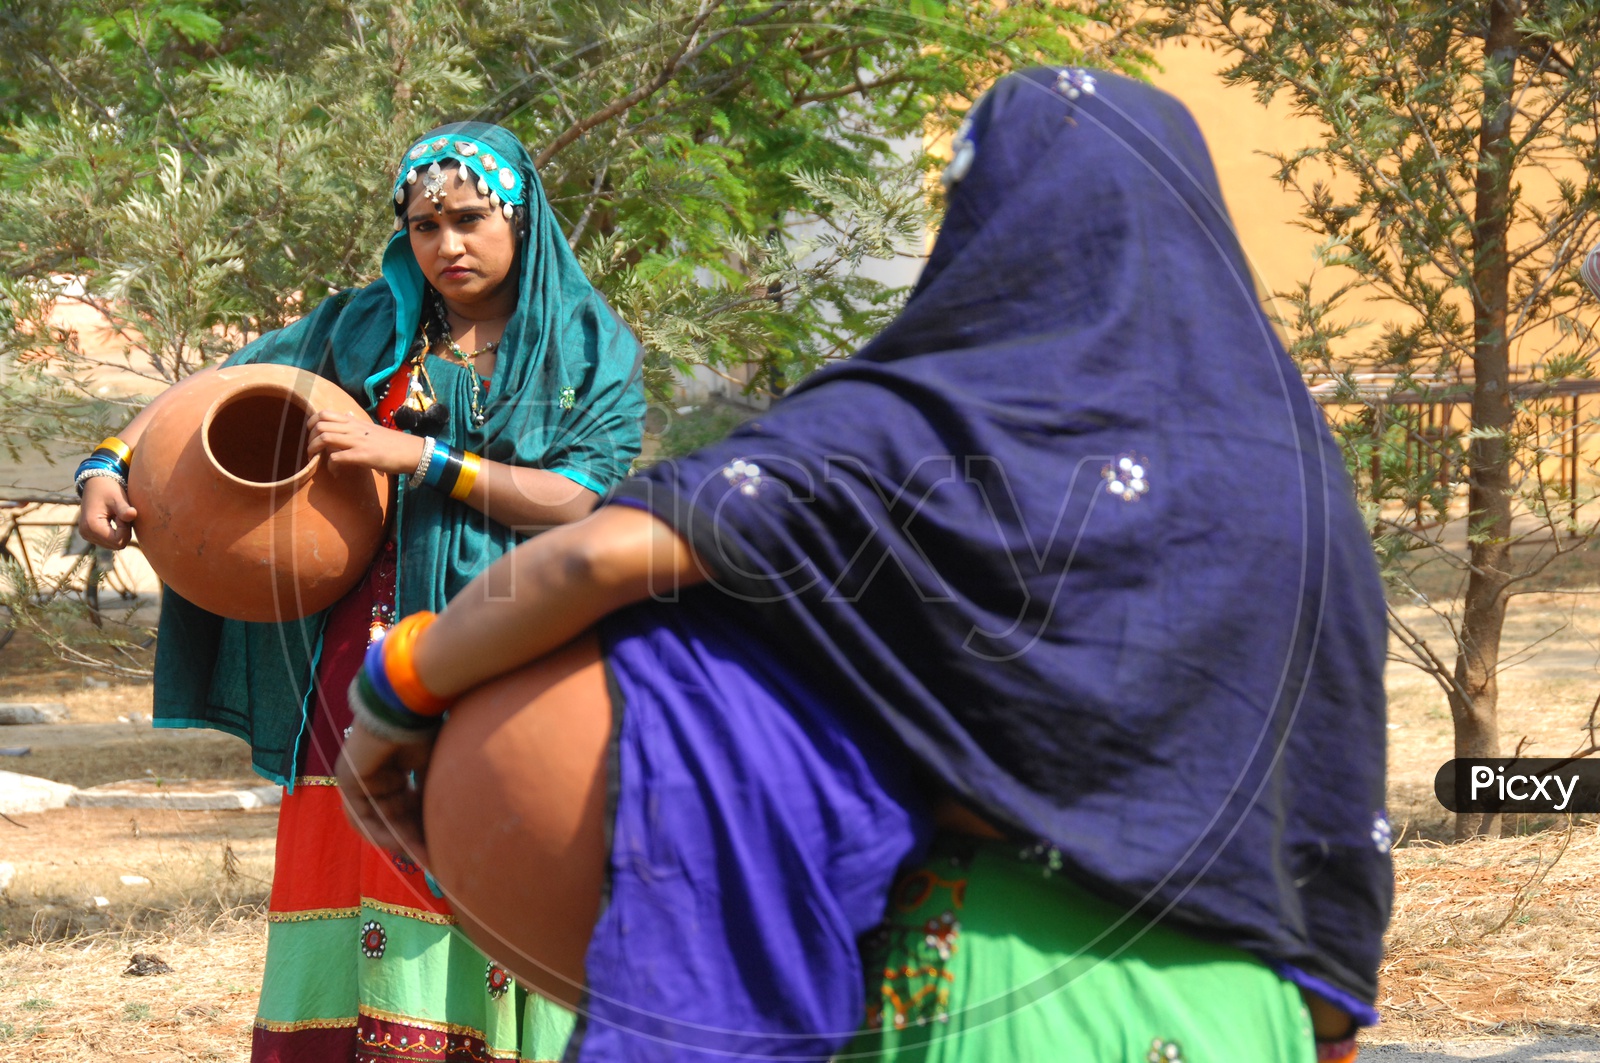 Indian Female in Rajasthani Attire